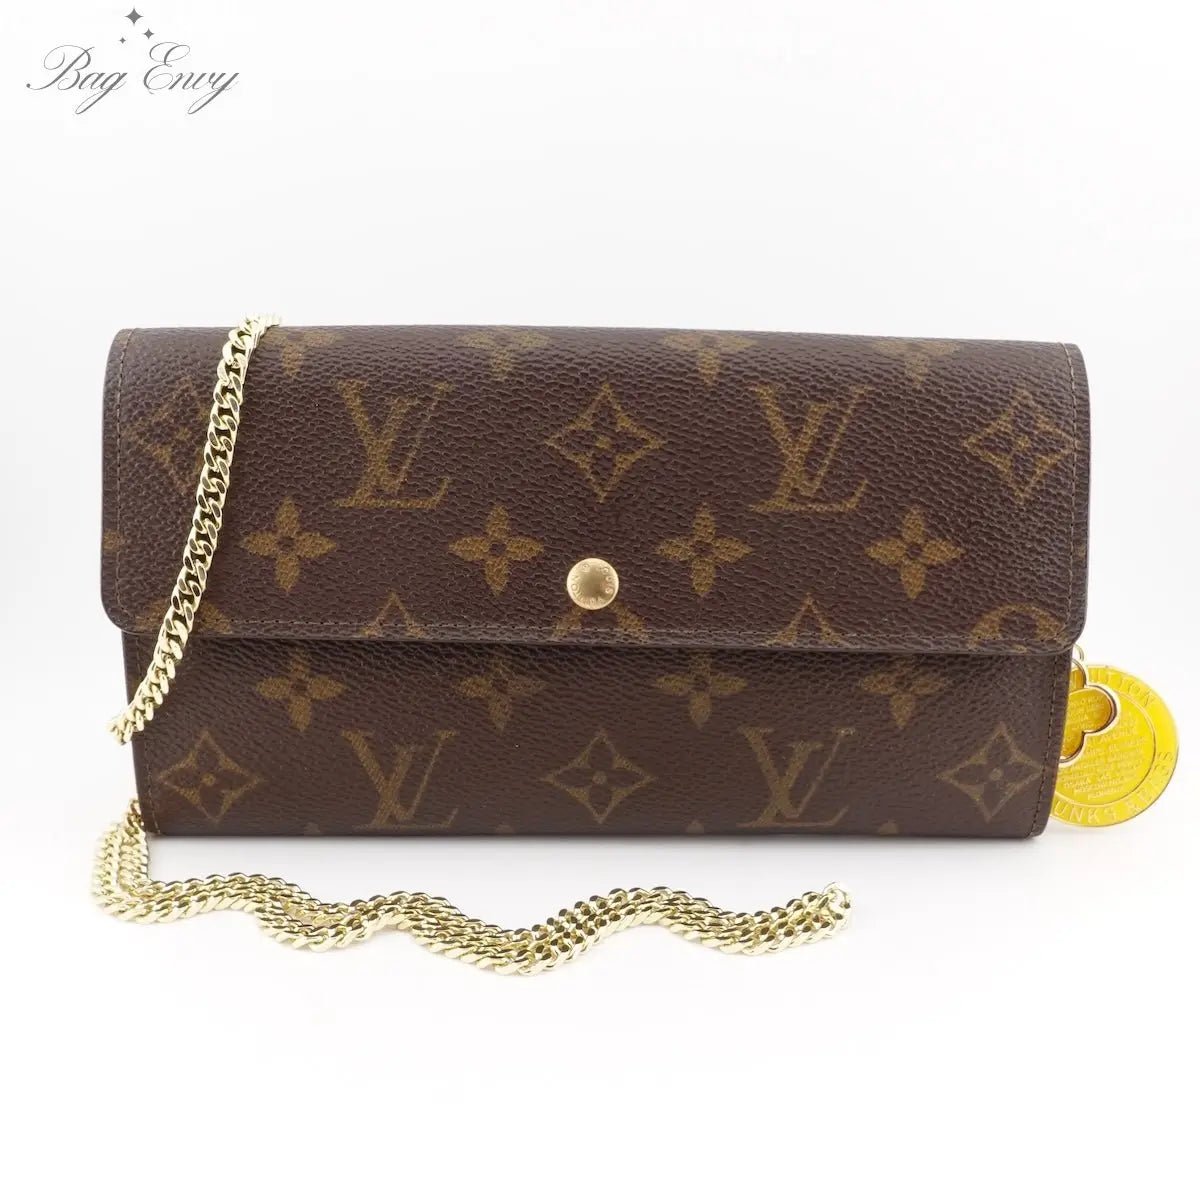 LOUIS VUITTON Monogram Sarah Wallet on Chain - Bag Envy